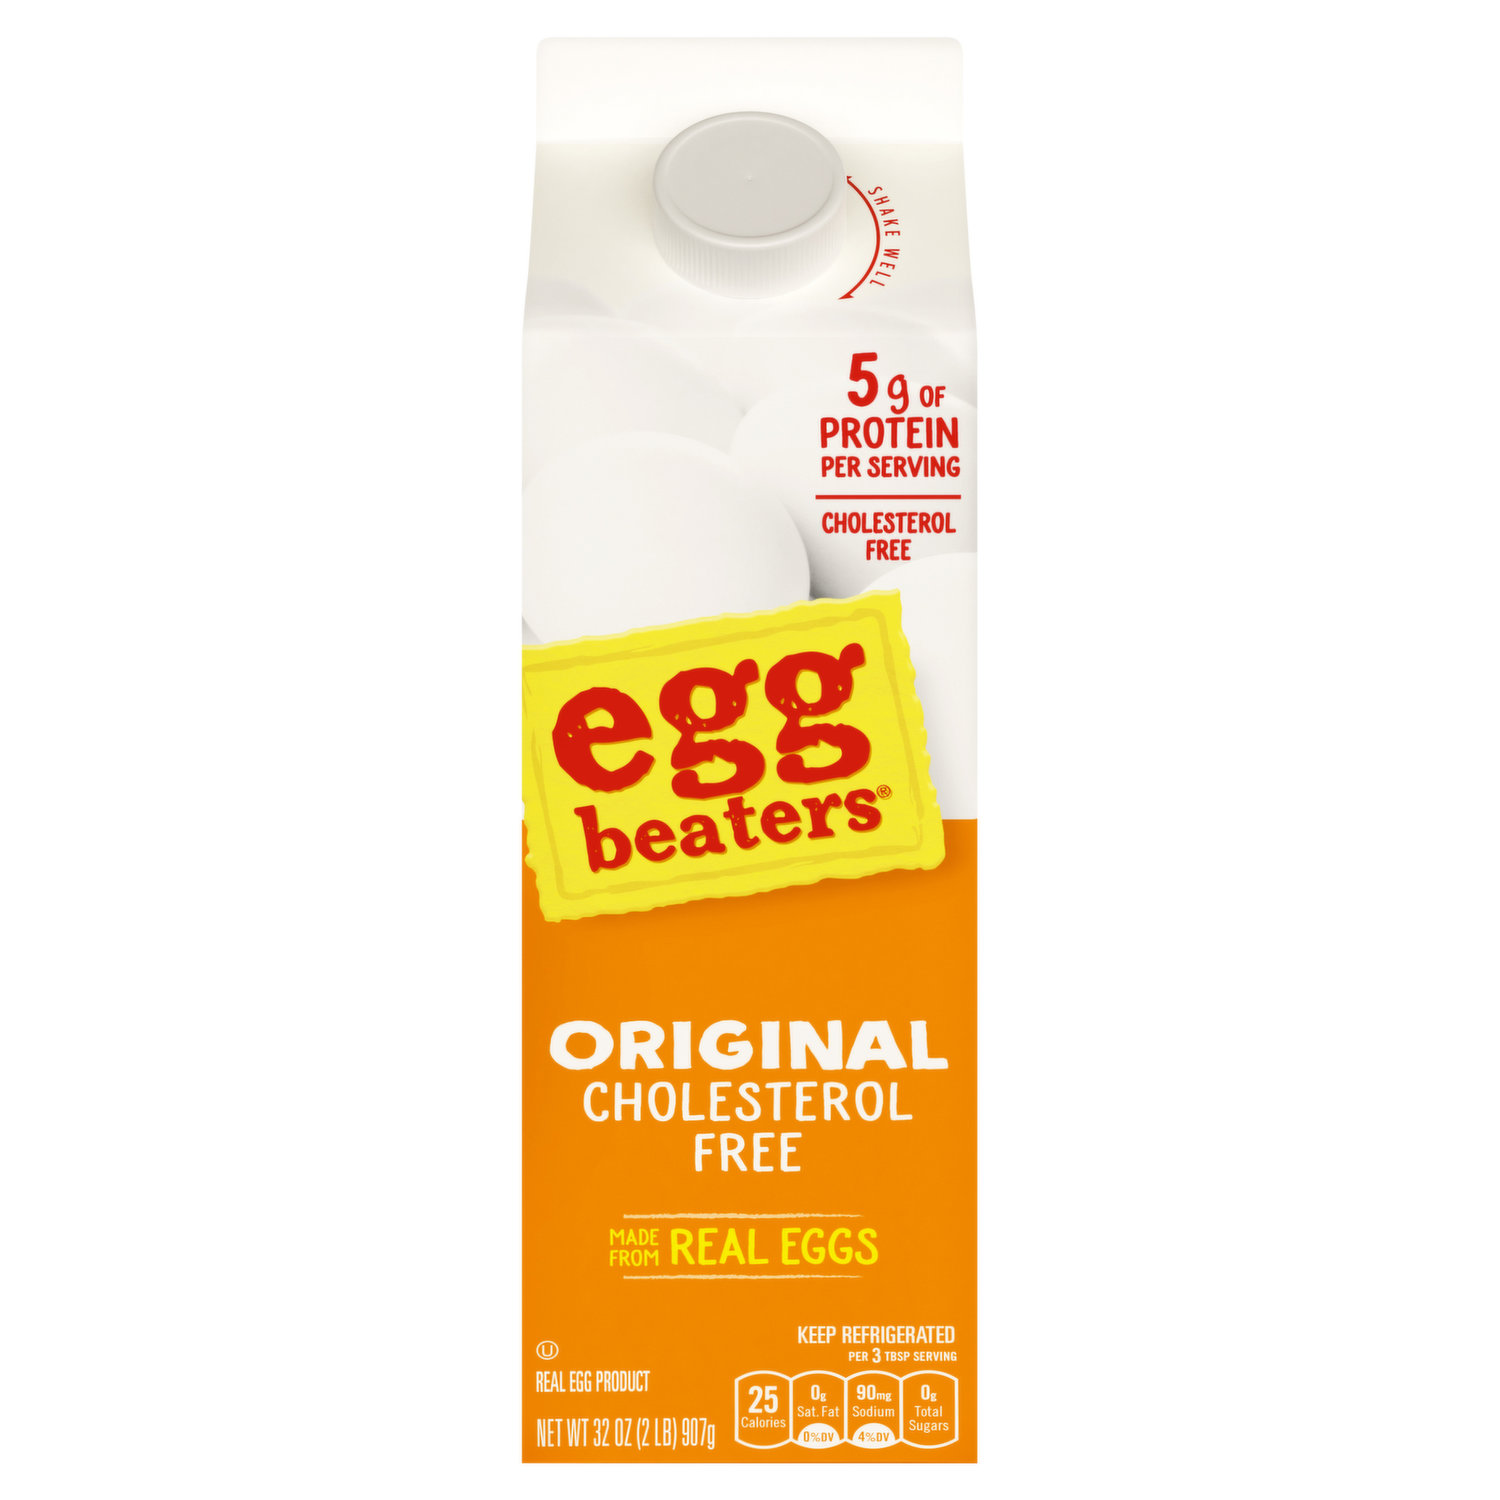 Egg Beaters Liquid Egg Substitutes, Southwestern Style